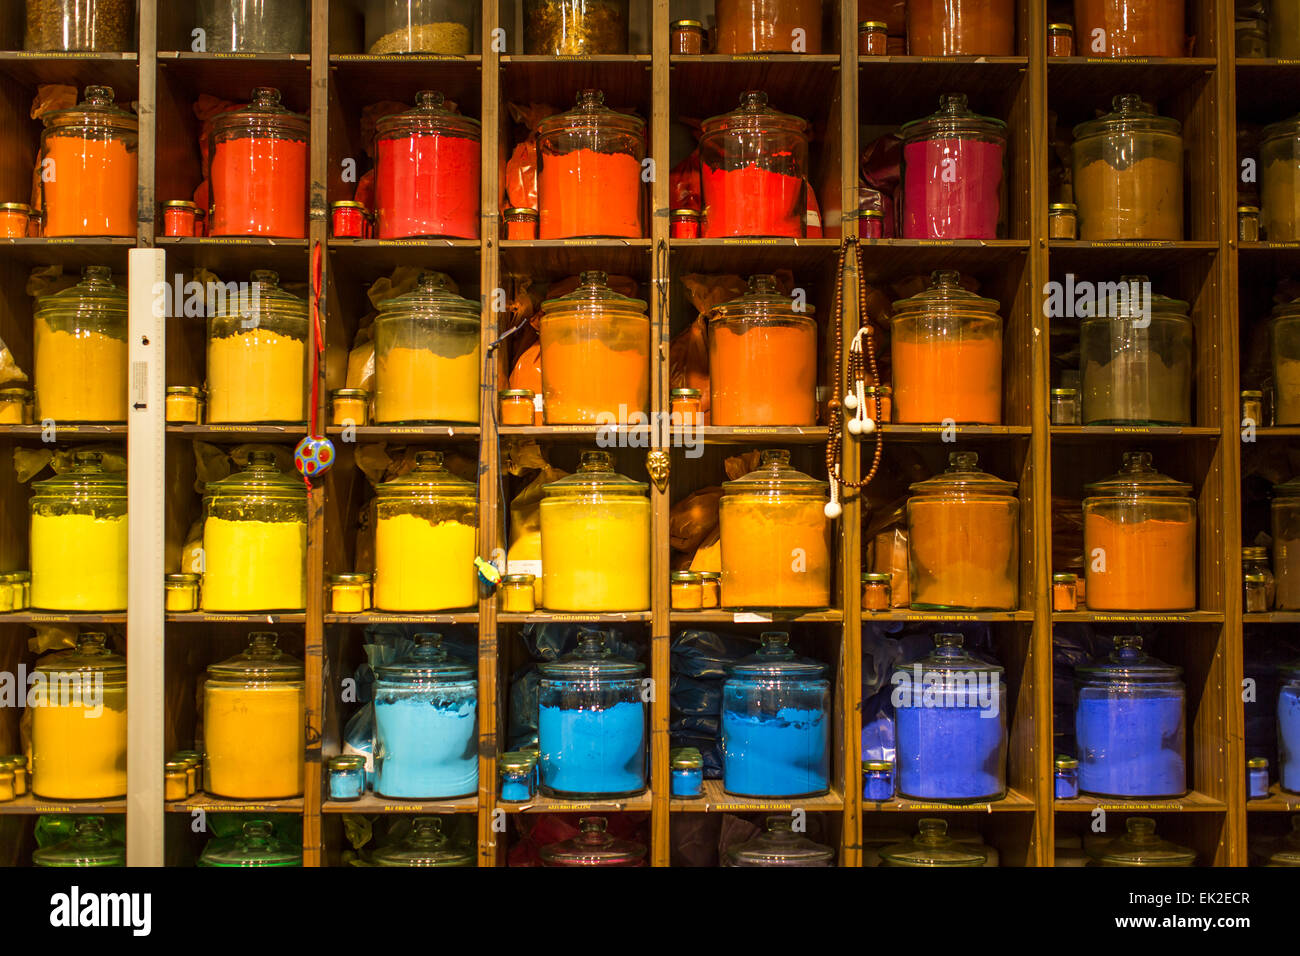 Multicolored Powdered Color Pigment Jars, Venice, Italy Stock Photo